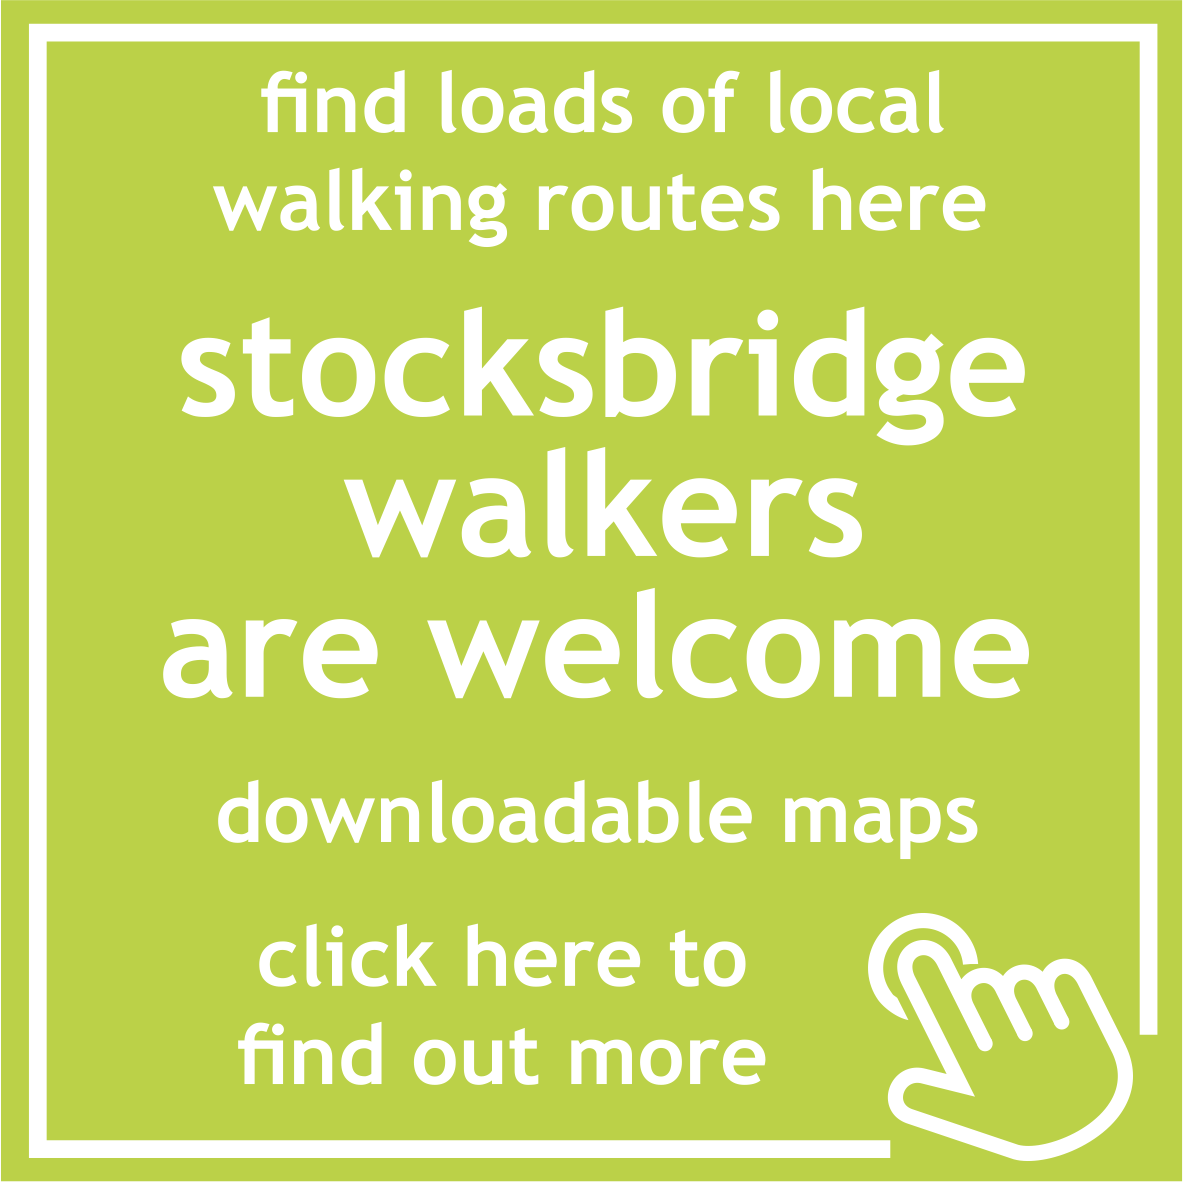 Stocksbridge Walkers are Welcome